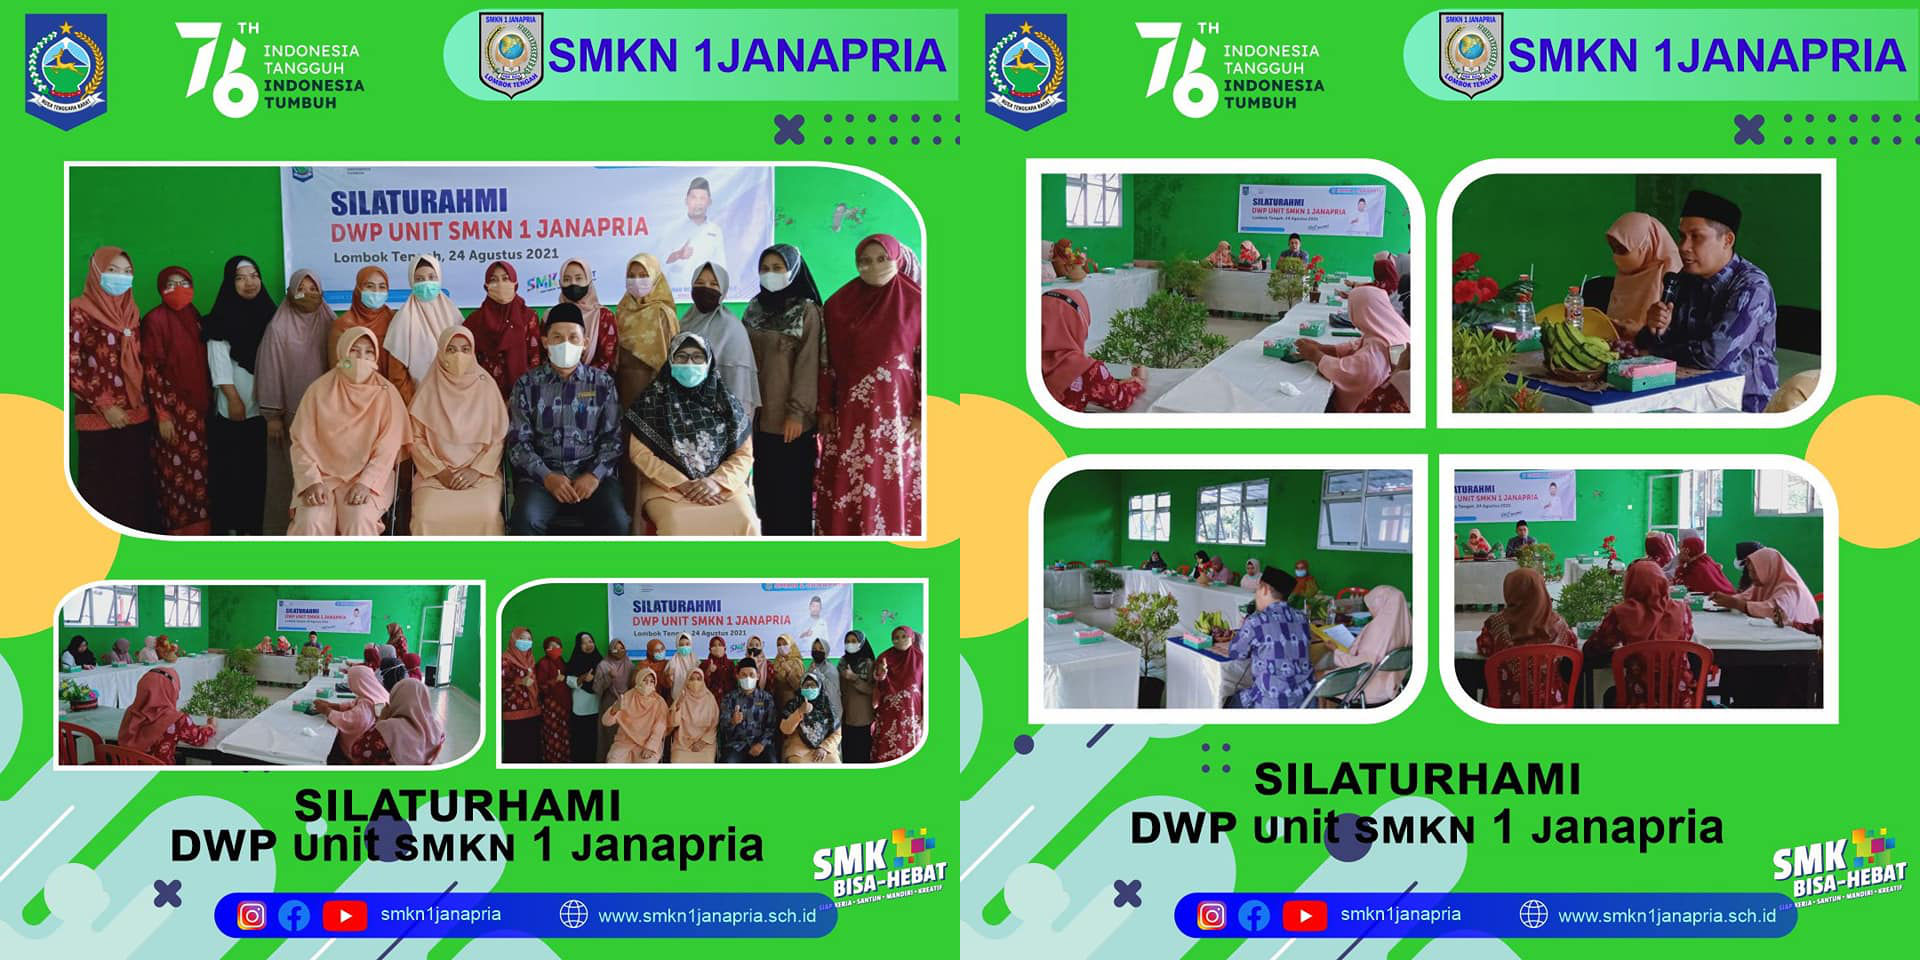 Silaturahmi DWP unit SMKN 1 Janapria